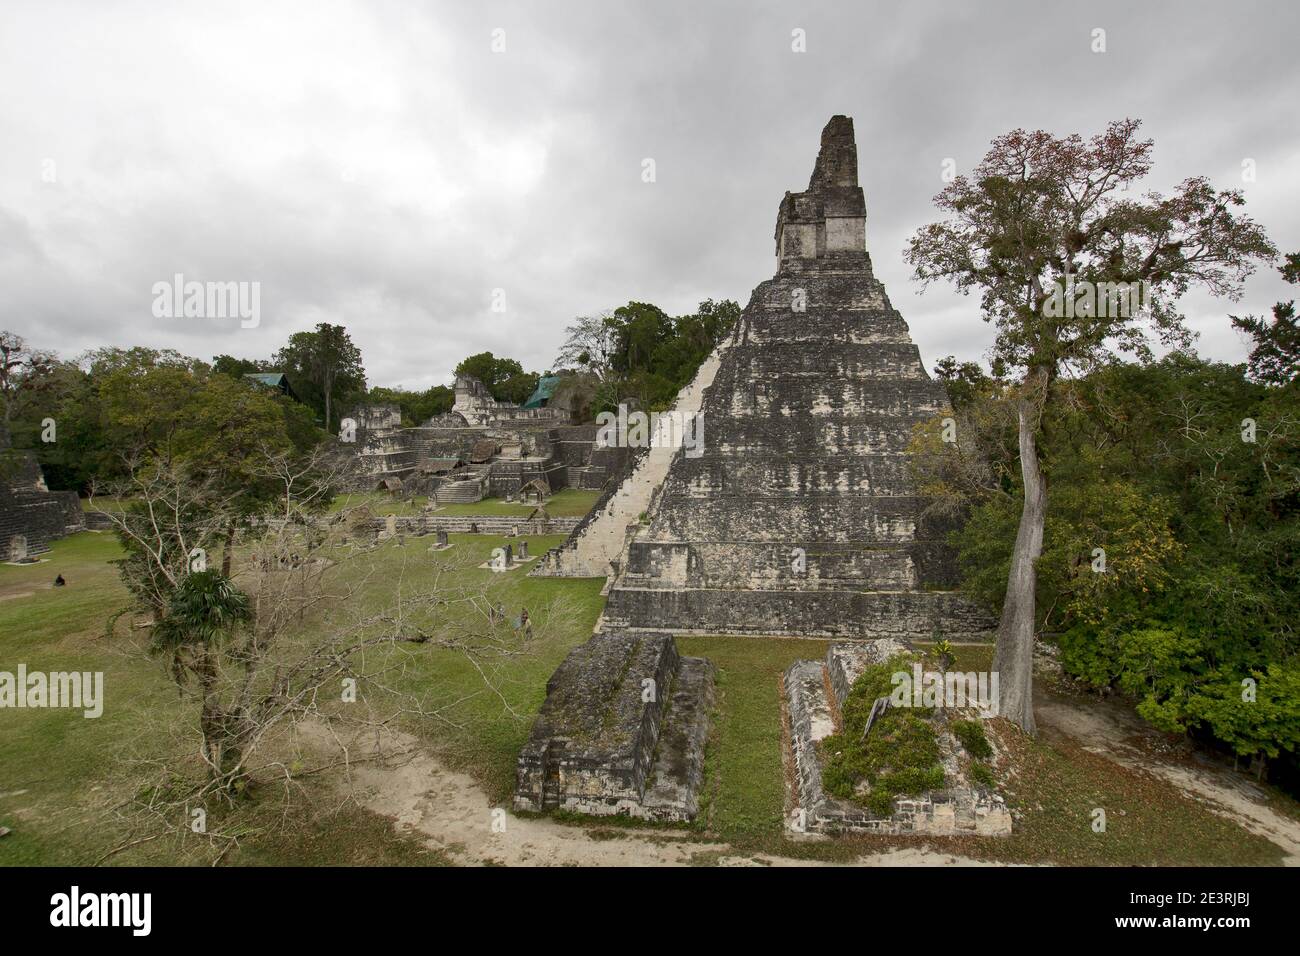 Tikal, Guatemala: Nationalpark, UNESCO-Weltkulturerbe. Grand Plaza mit der nördlichen Akropolis und Tempel/Pyramide I (großer Jaguar Tempel) Stockfoto